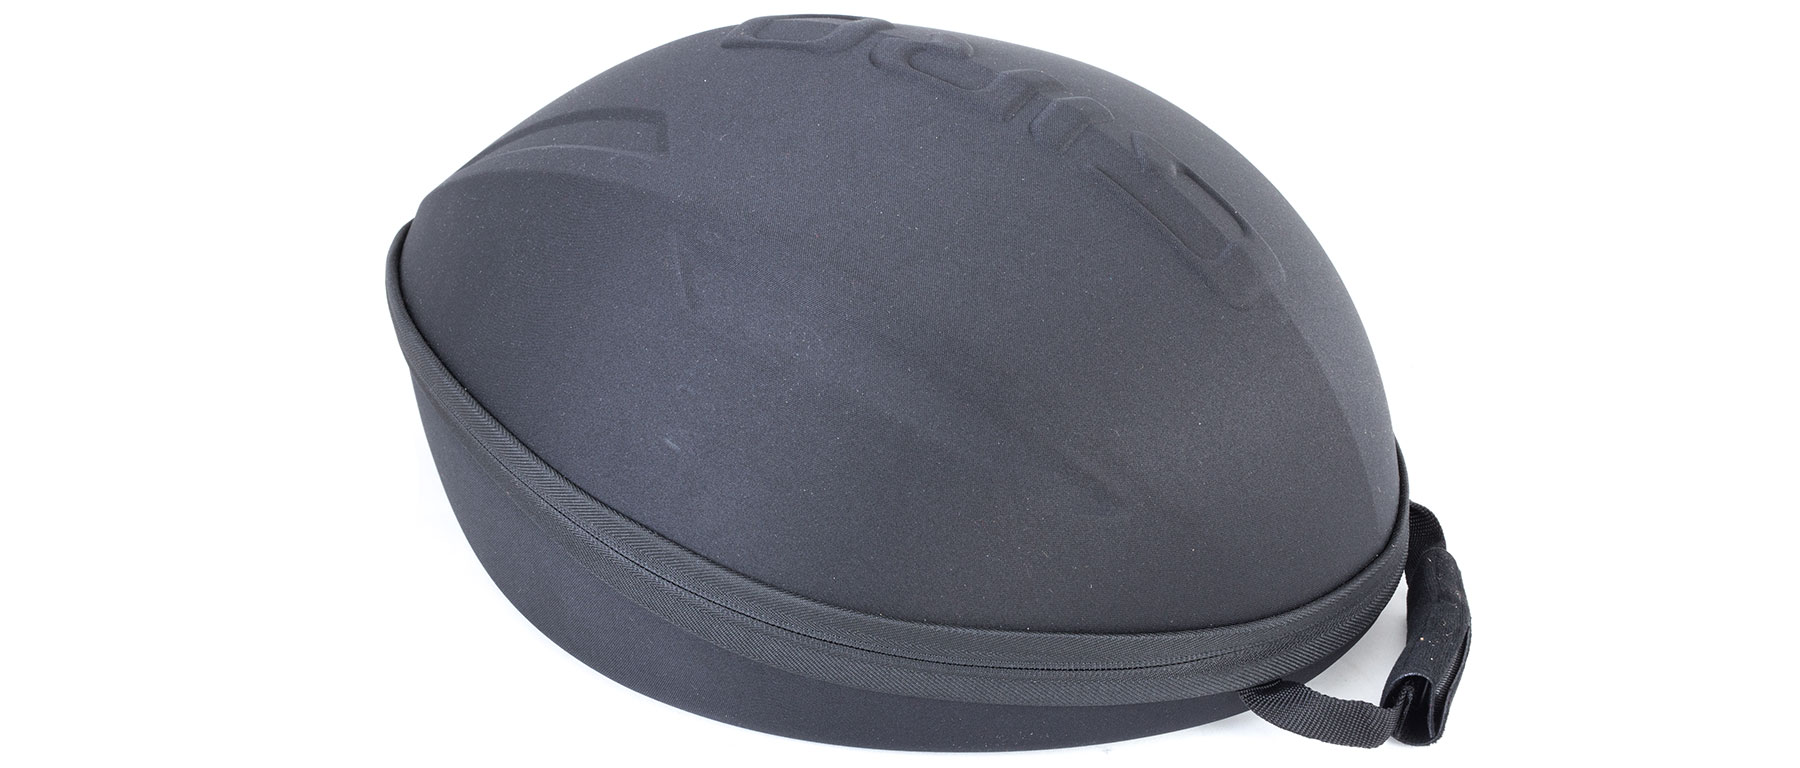 Giro Aerohead Ultimate MIPS Helmet